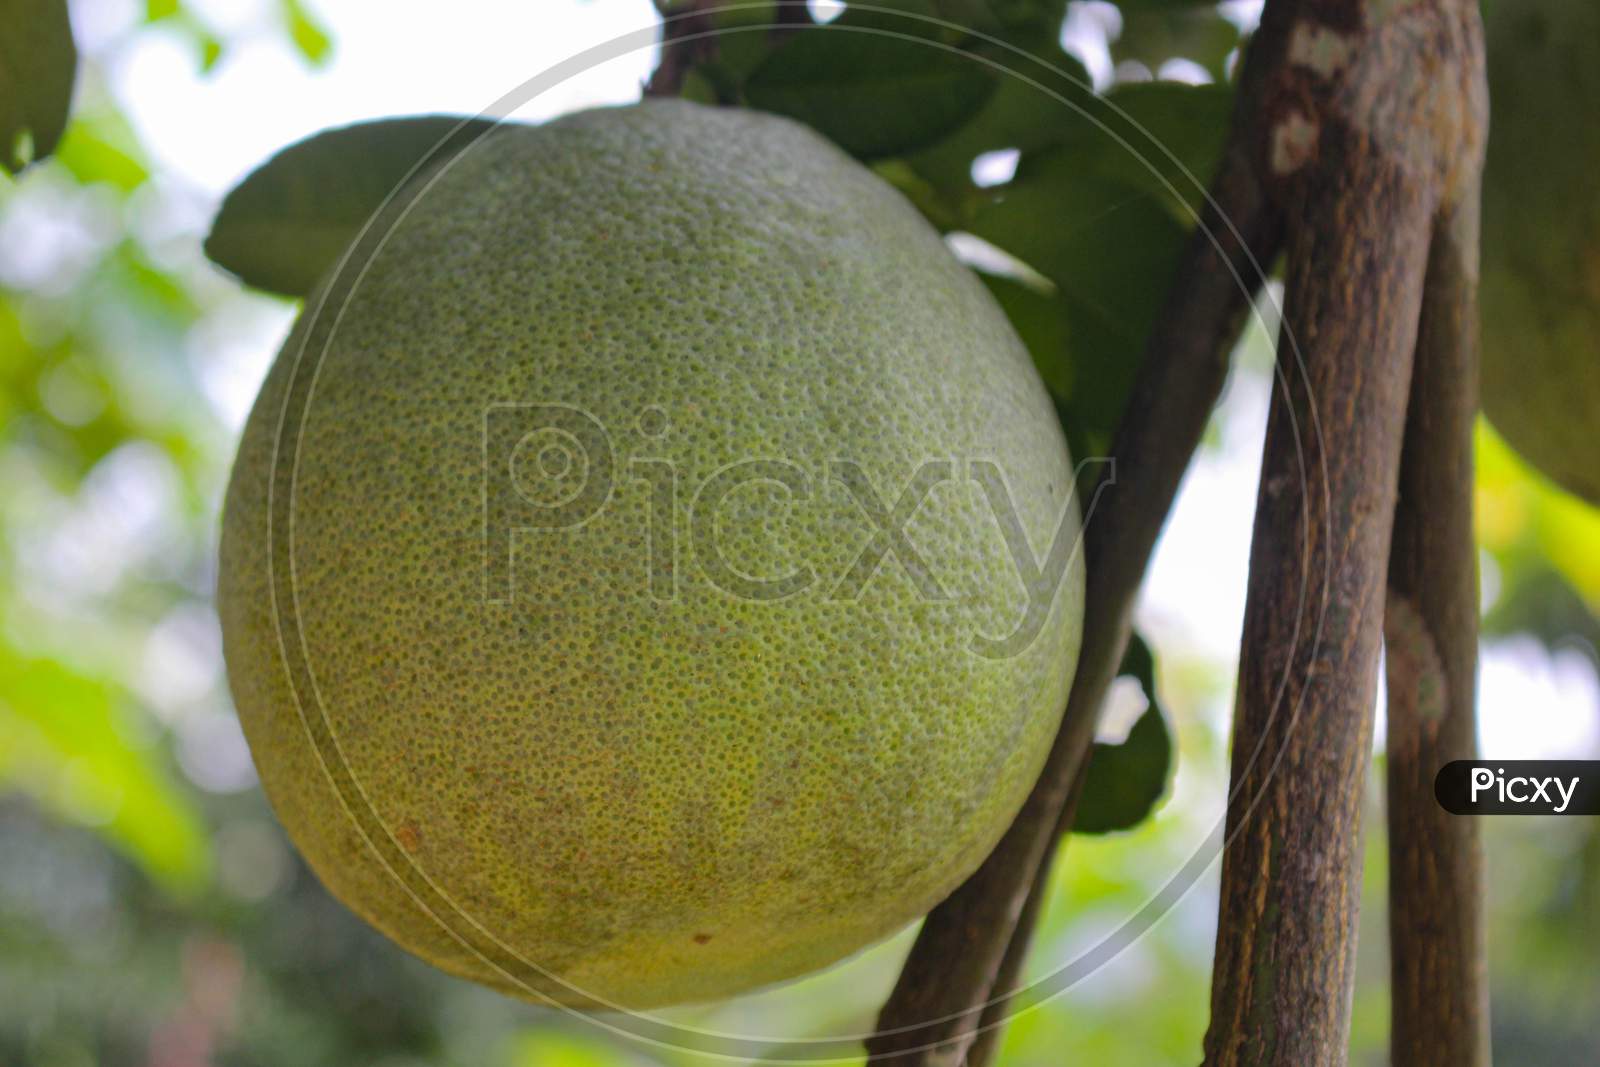 Pomelo citrus fruit, green pomelo hanging on branch